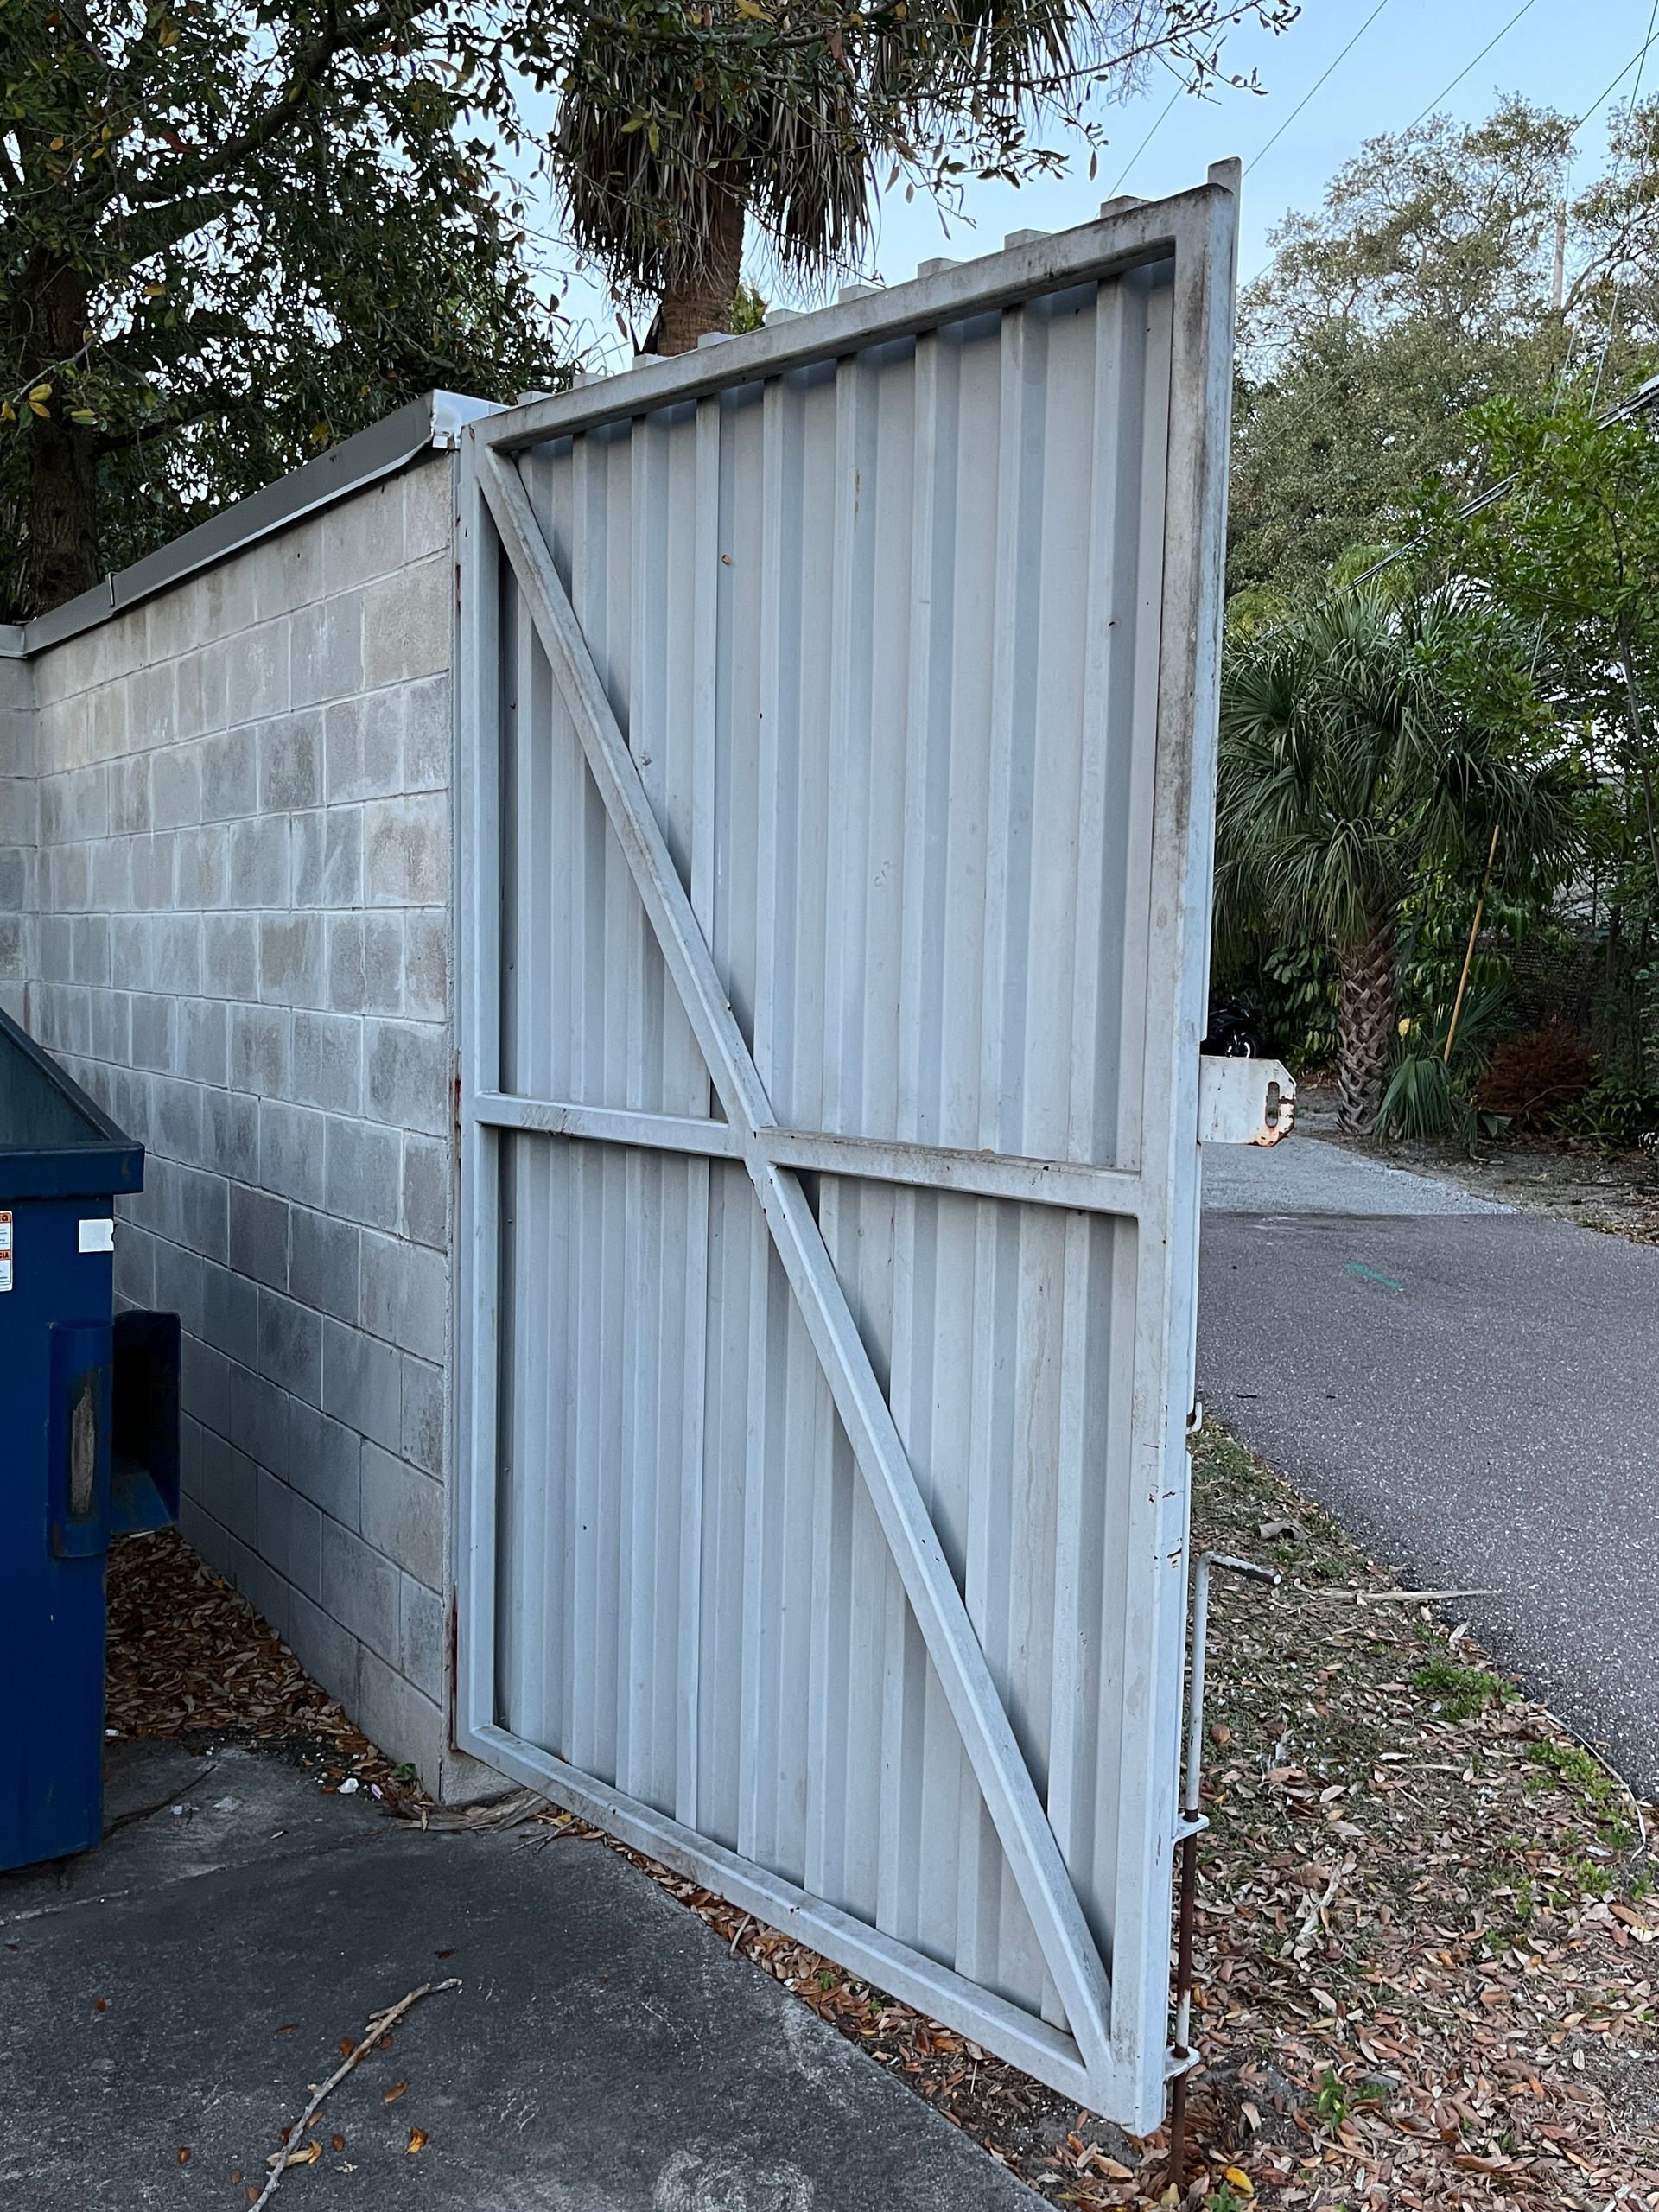 dumpster door installed on cinder block enclosure